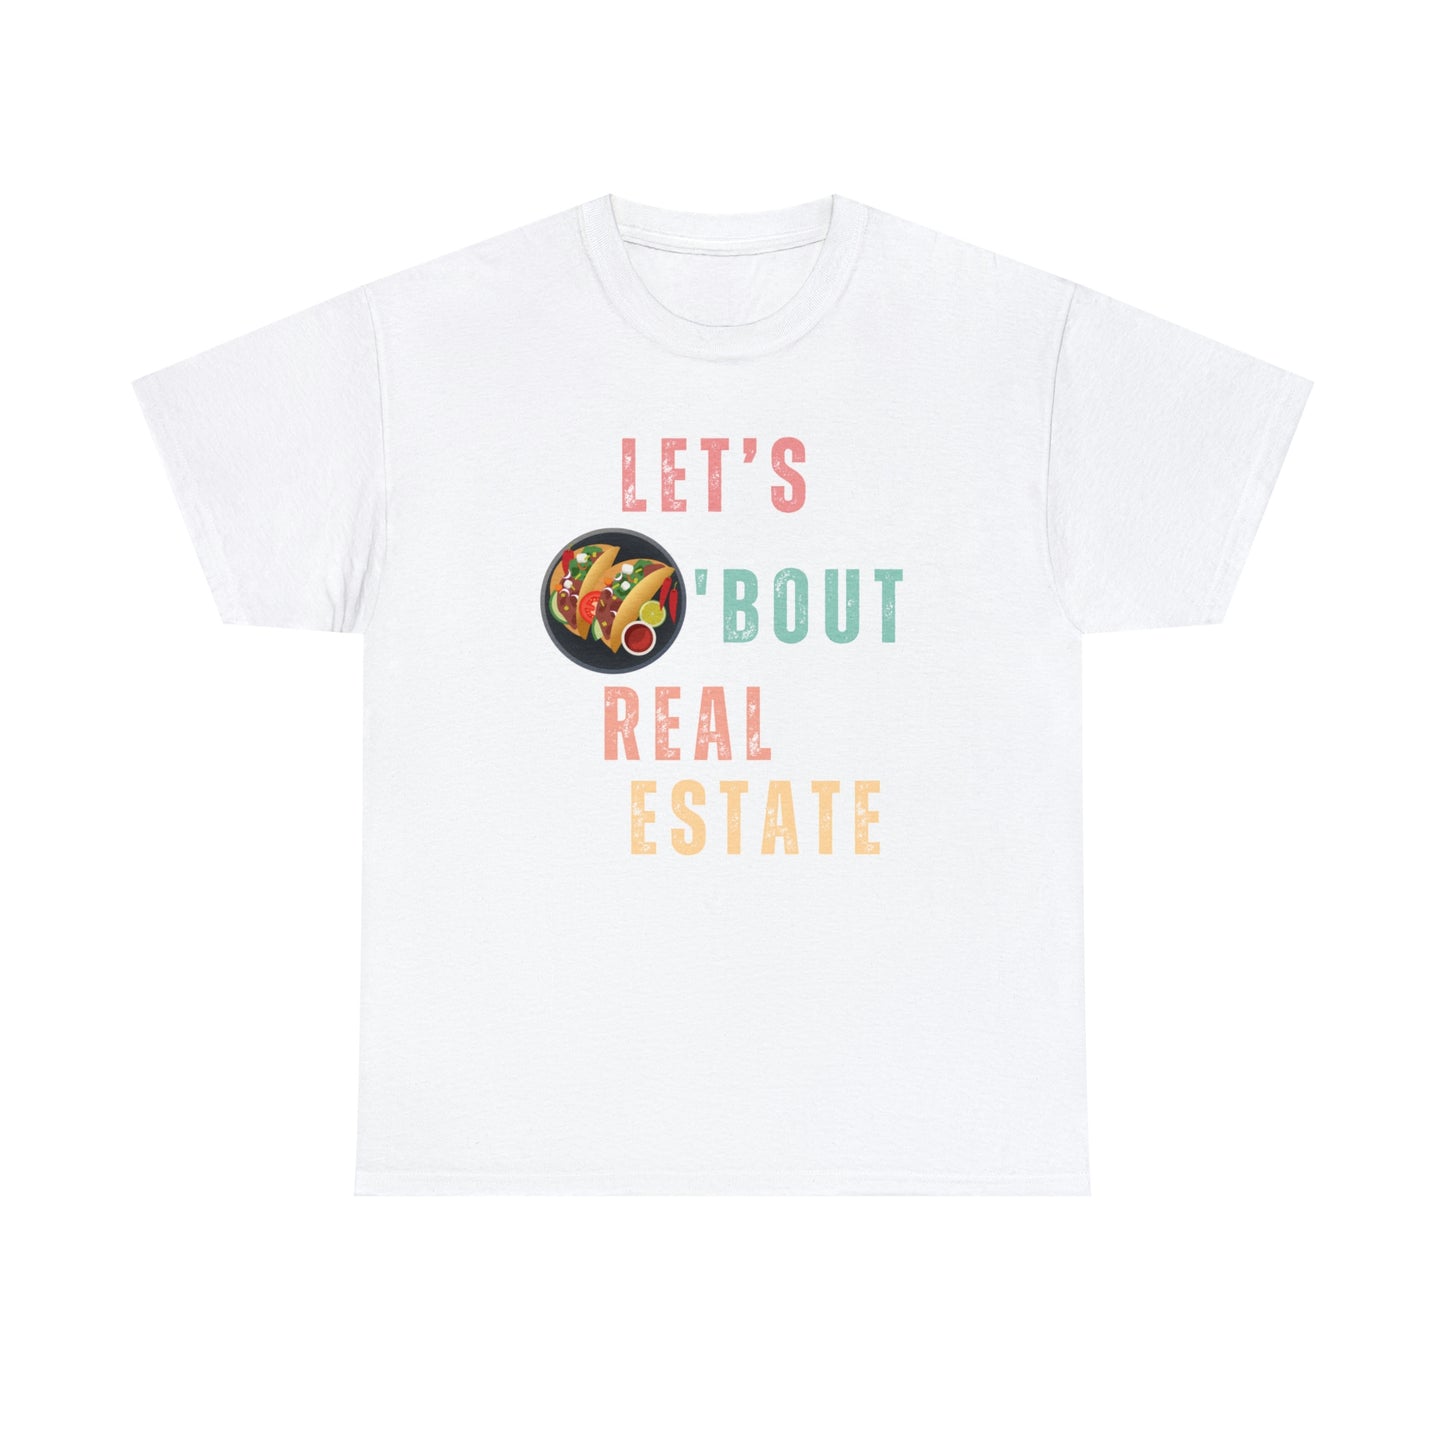 Let's Talk About Real Estate Unisex T-Shirt